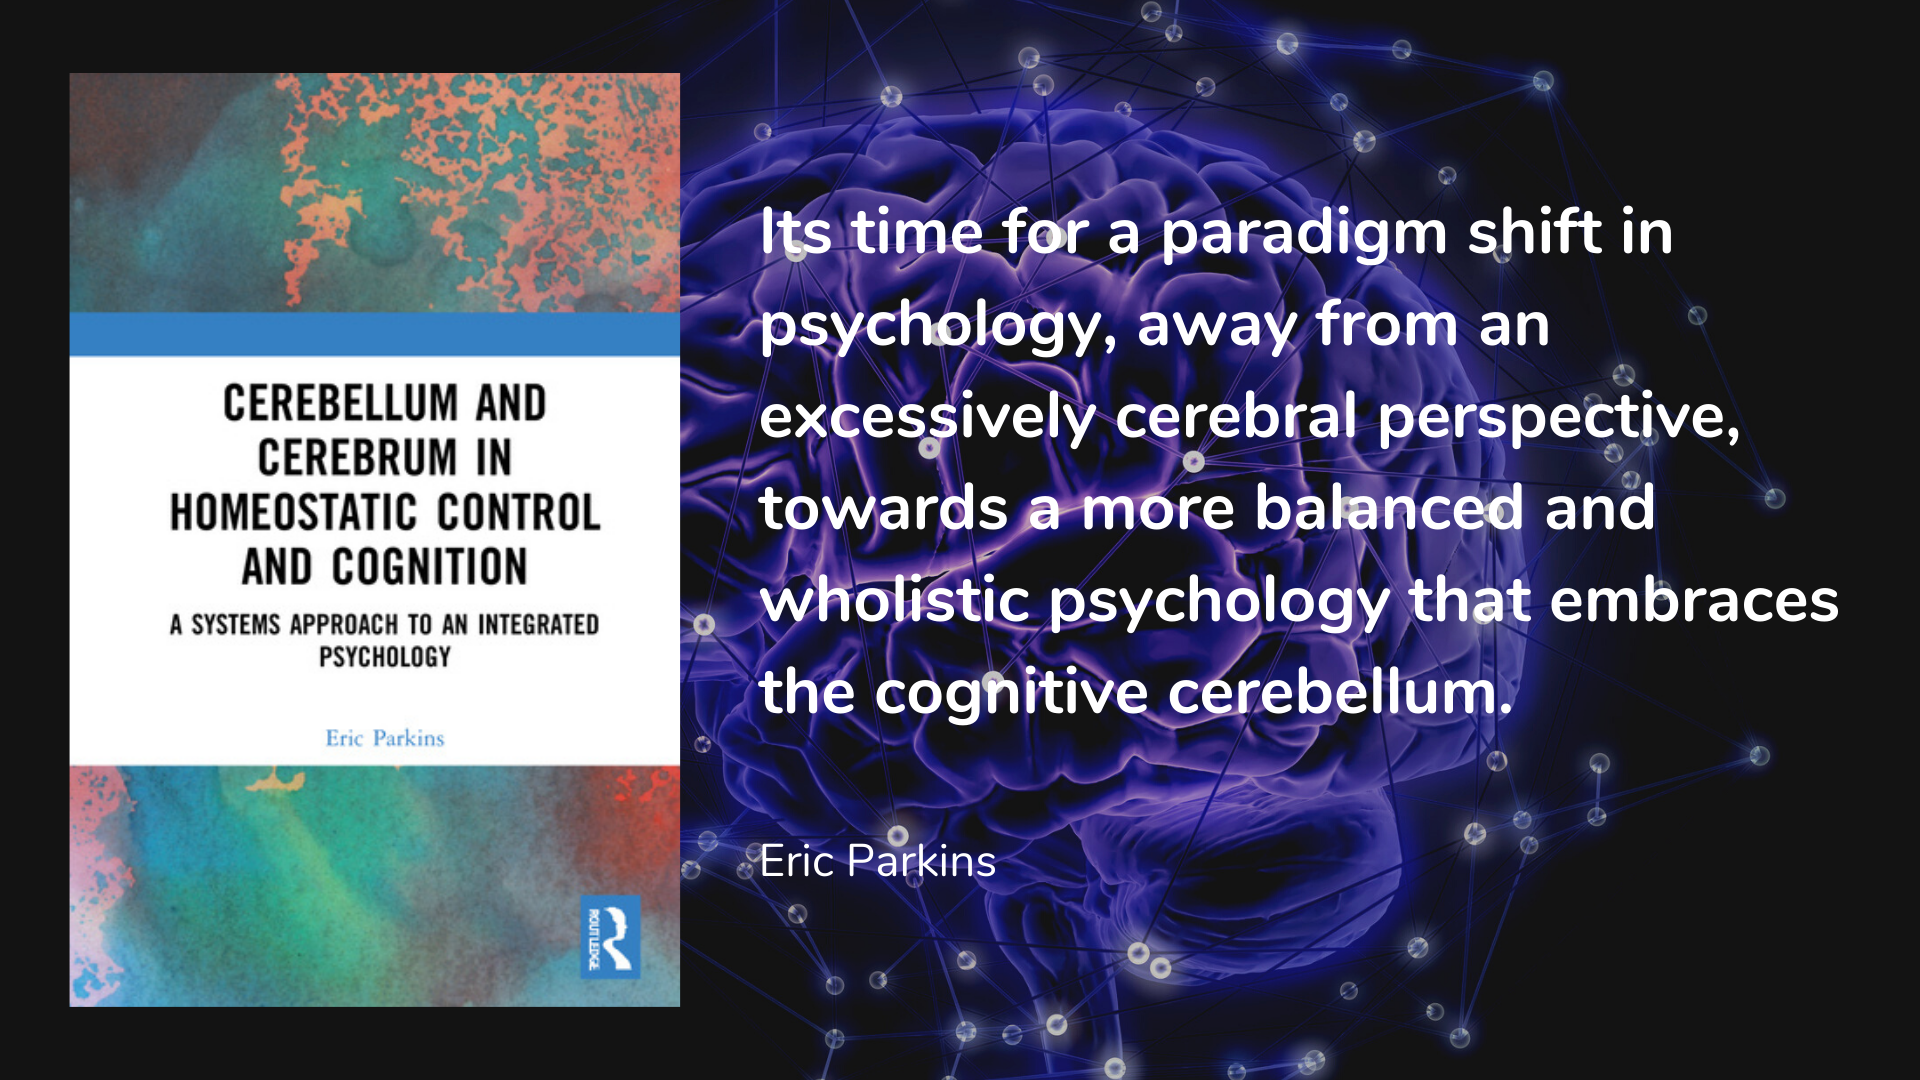 Cerebellum and Cerebrum in Homeostatic Control and Cognition, book cover and description.